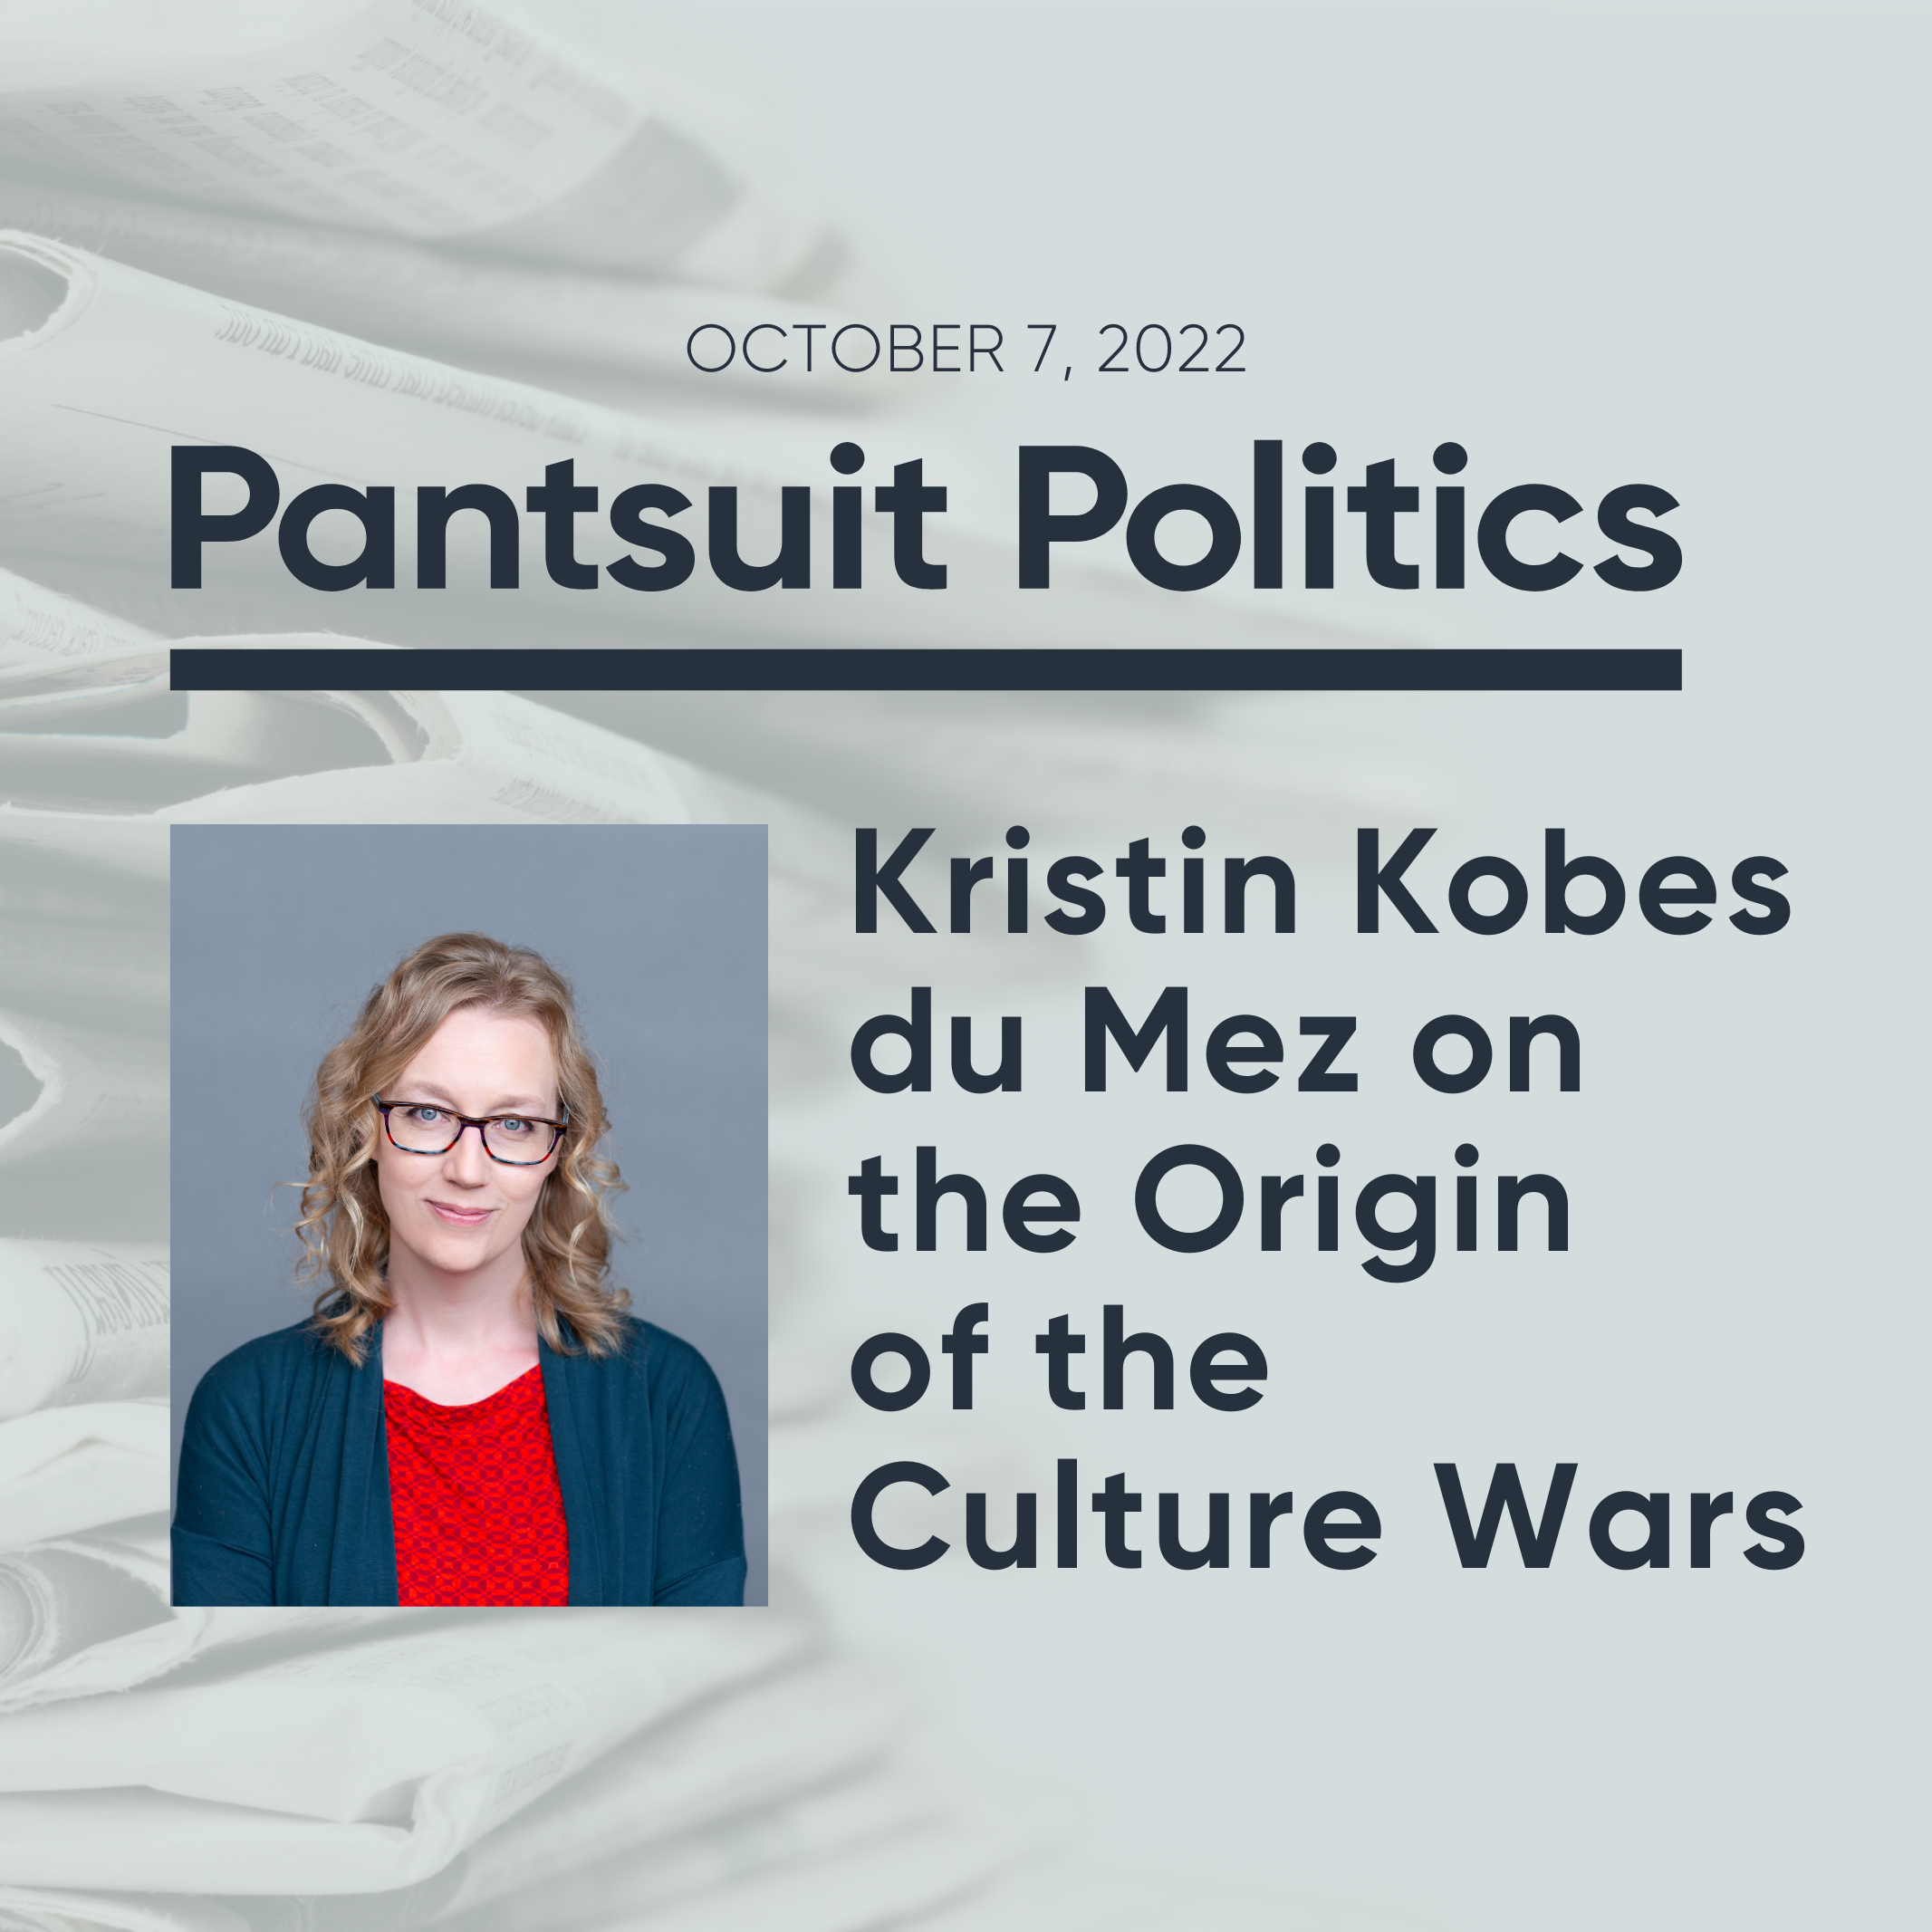 Kristin Kobes du Mez on the Origin of the Culture Wars